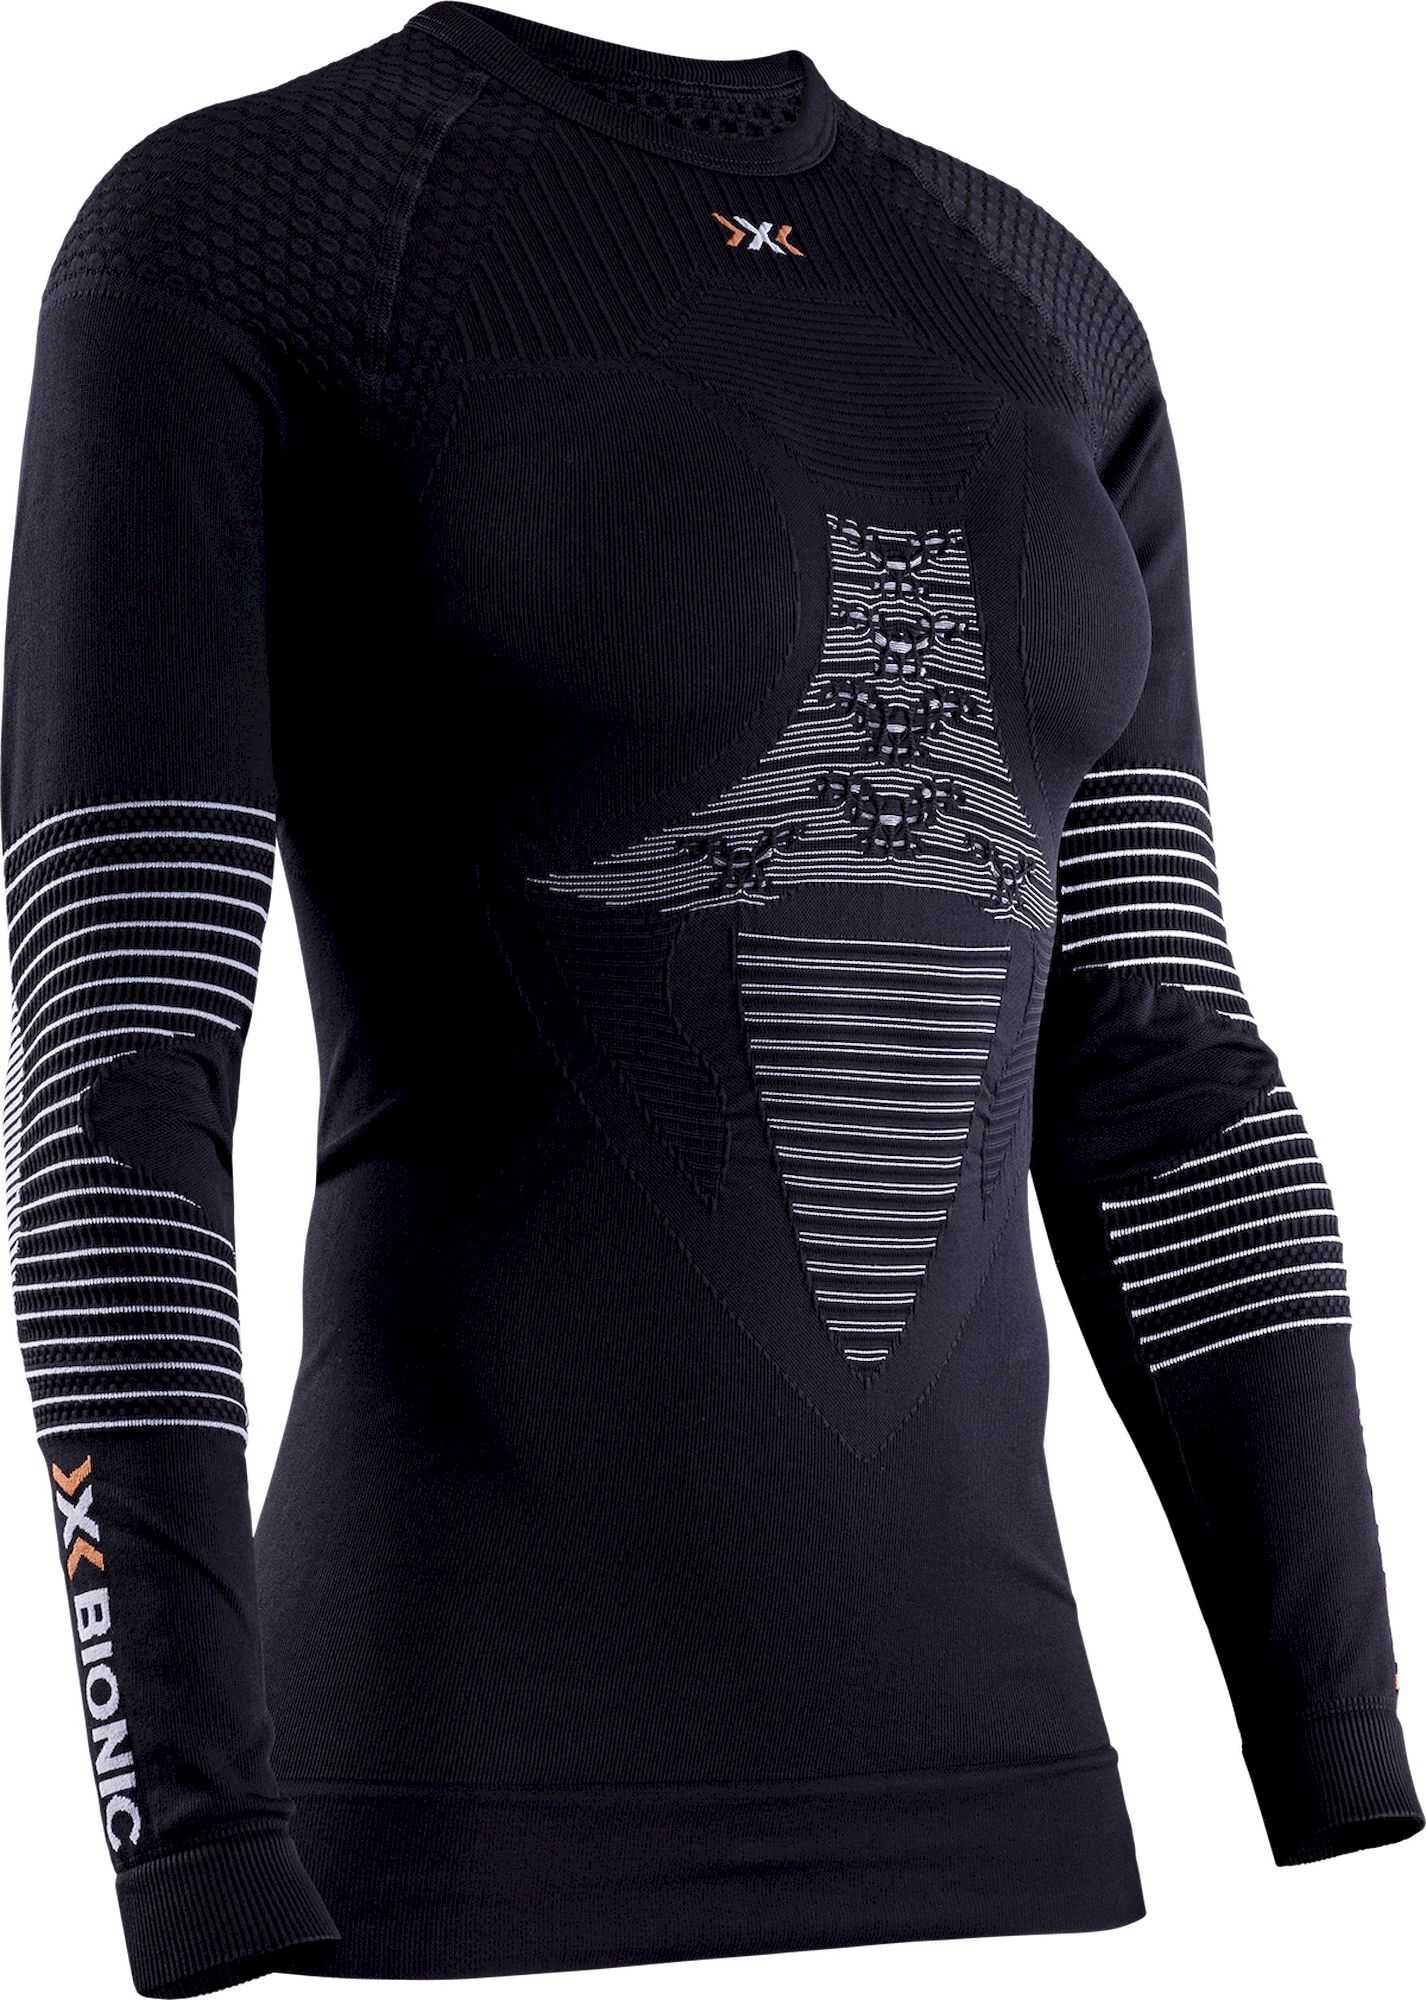 X-Bionic Energizer 4.0 Shirt Long Sleeve - Intimo - Donna